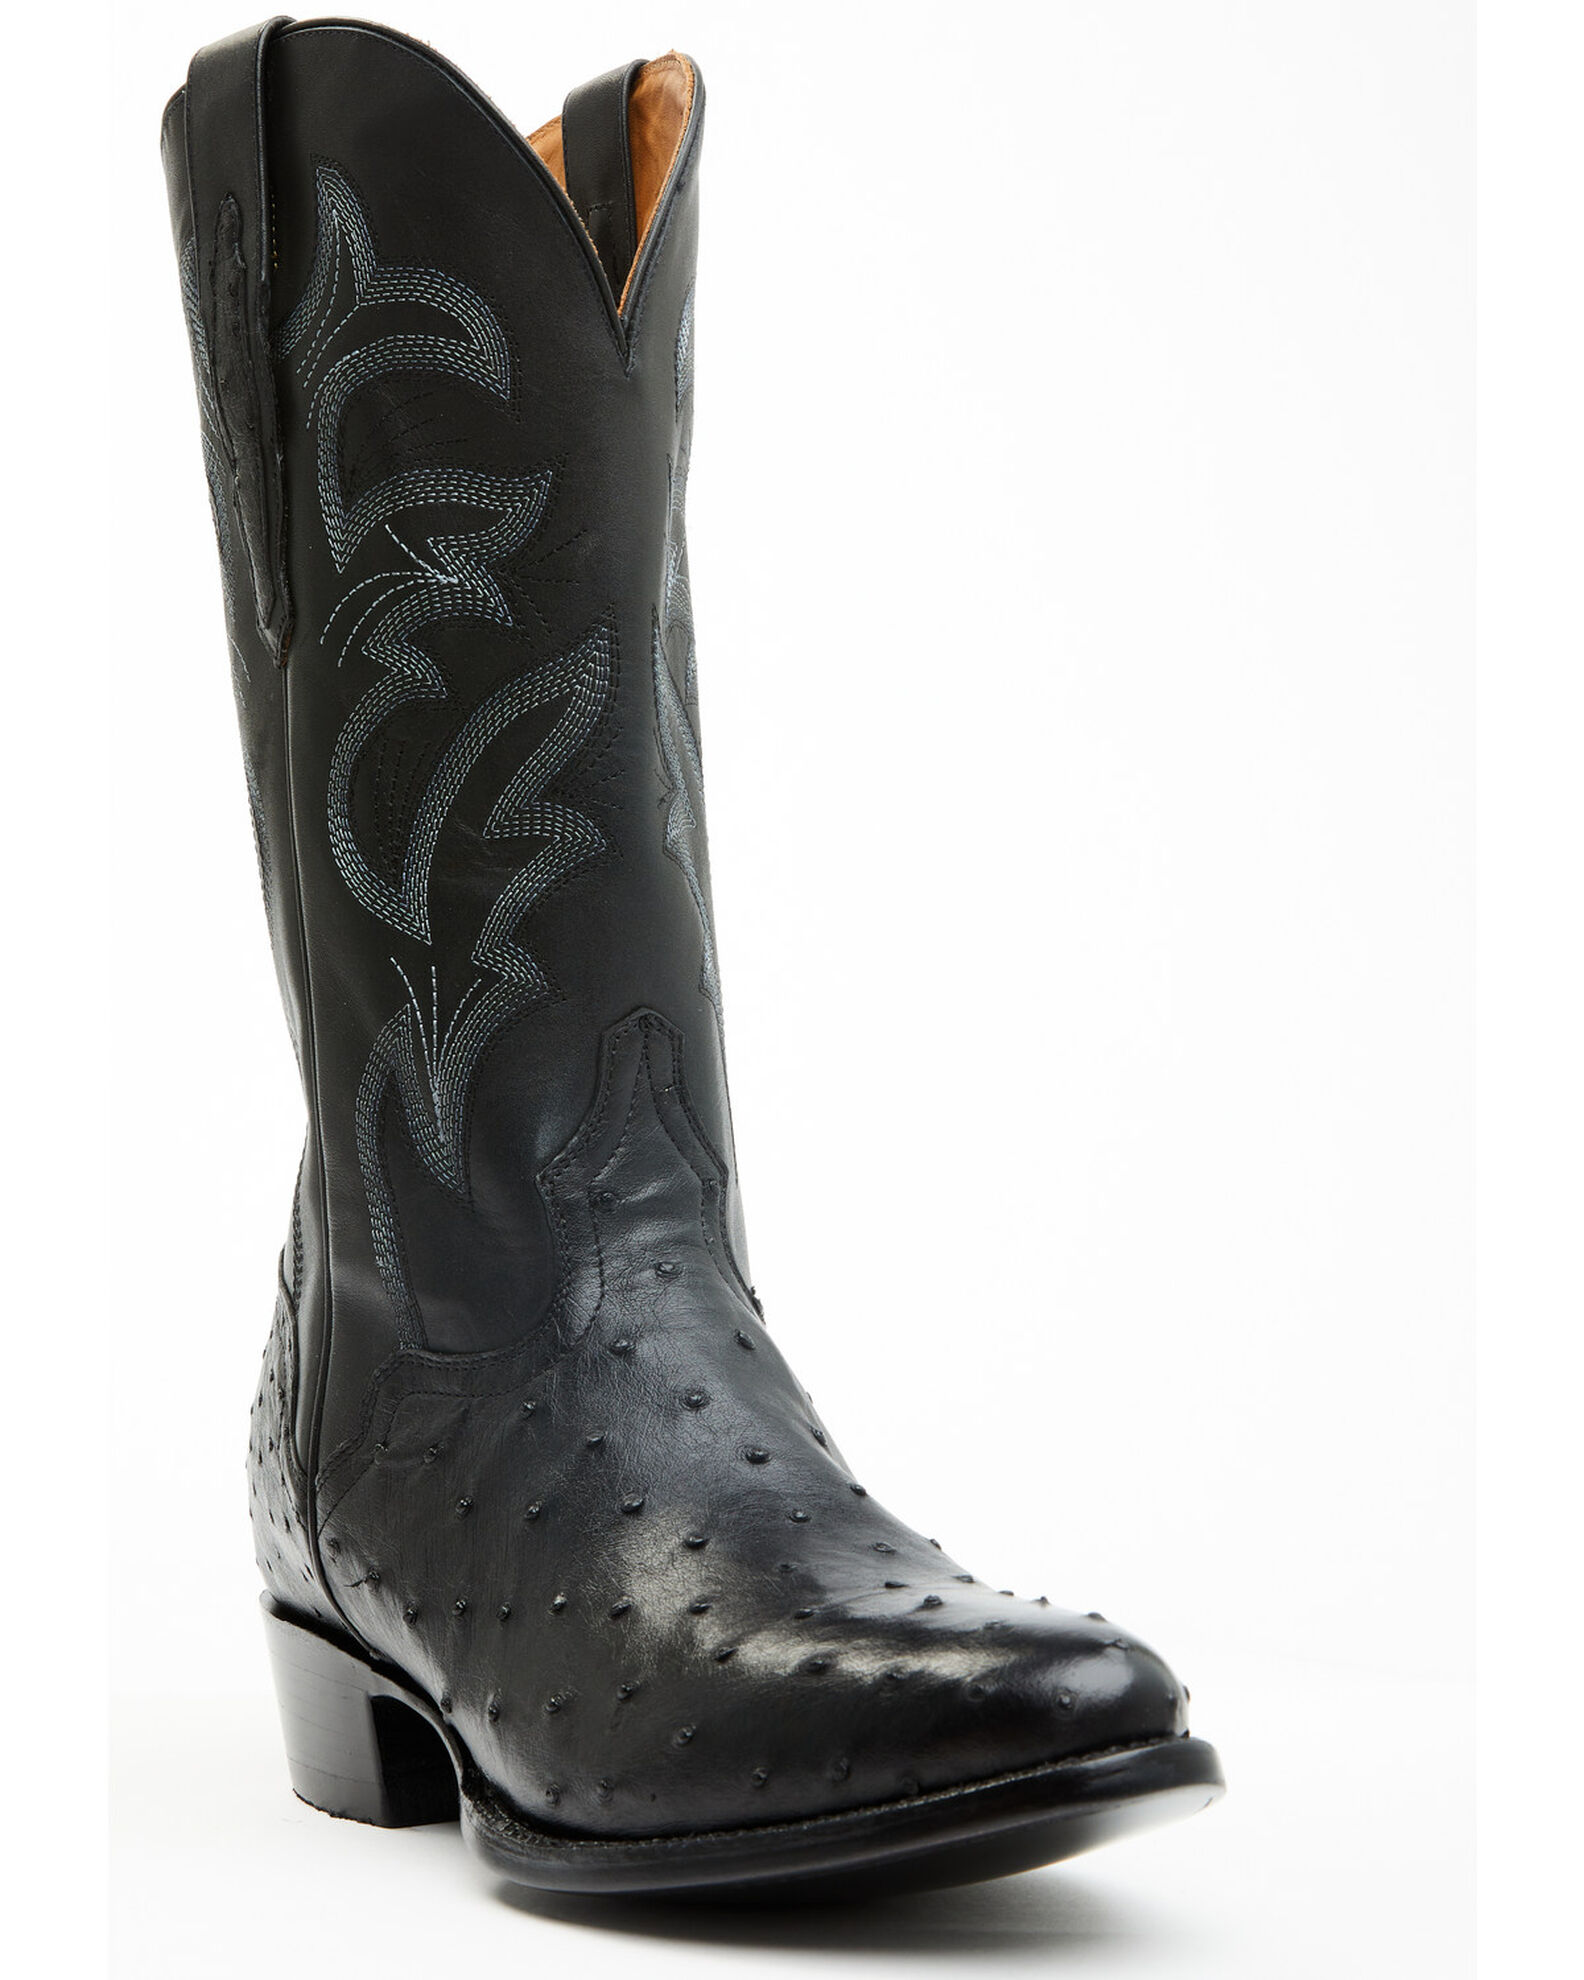 EL Dorado Men's Full Quill Ostrich Exotic Western Boots - Medium Toe